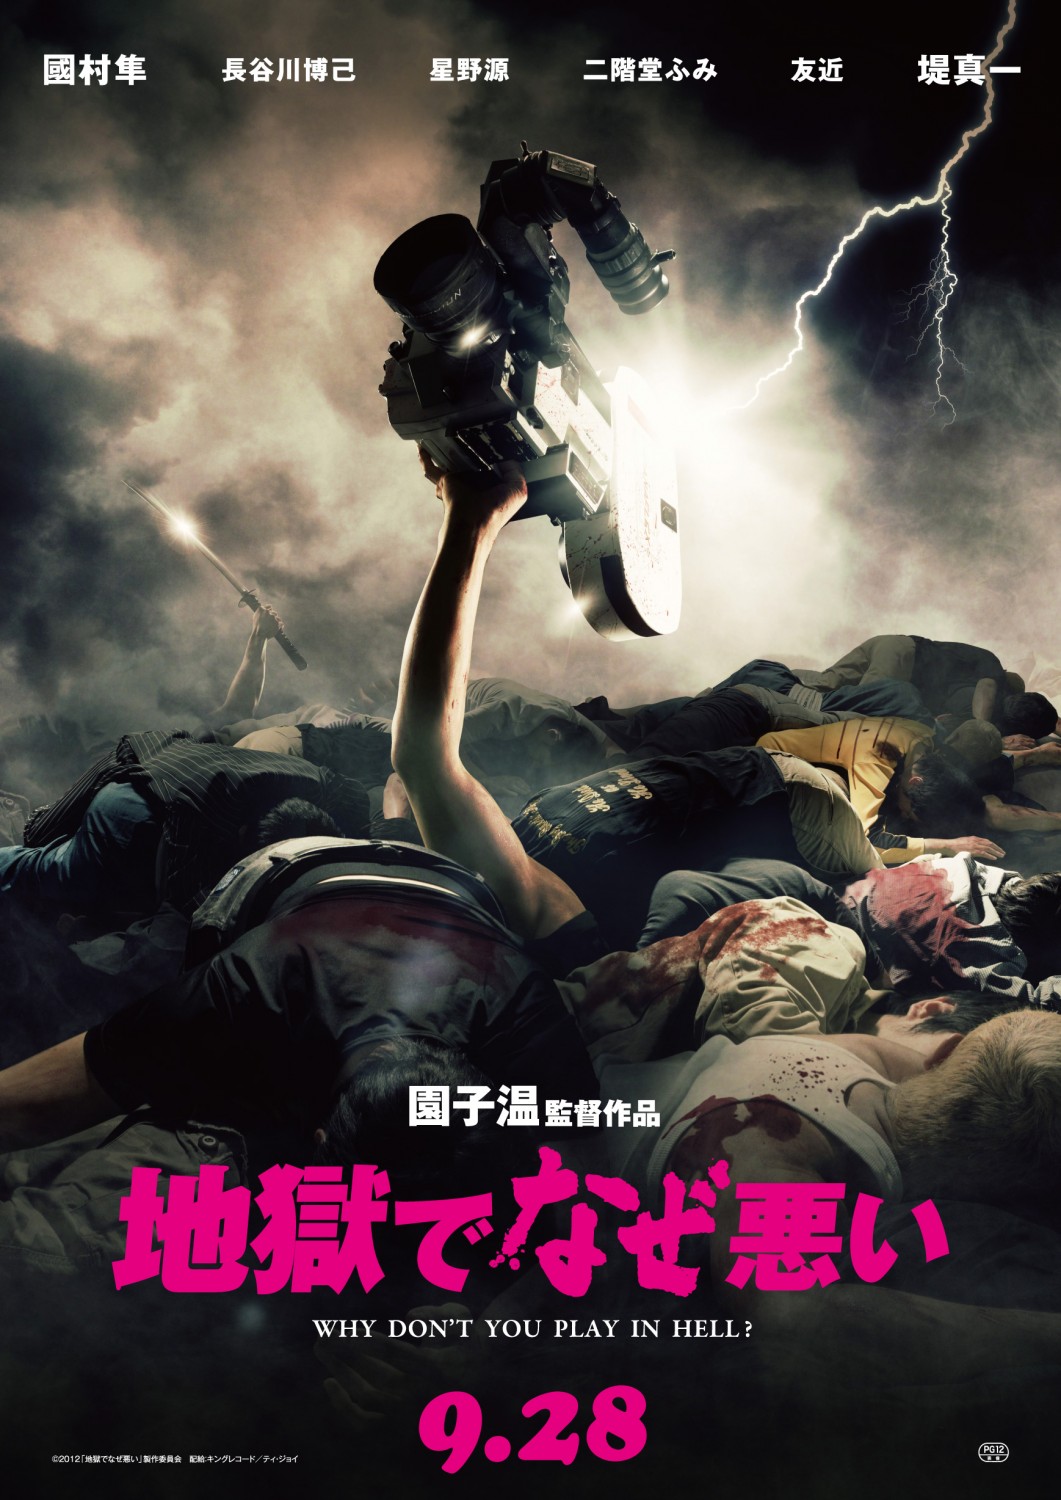 Extra Large Movie Poster Image for Jigoku de naze warui 